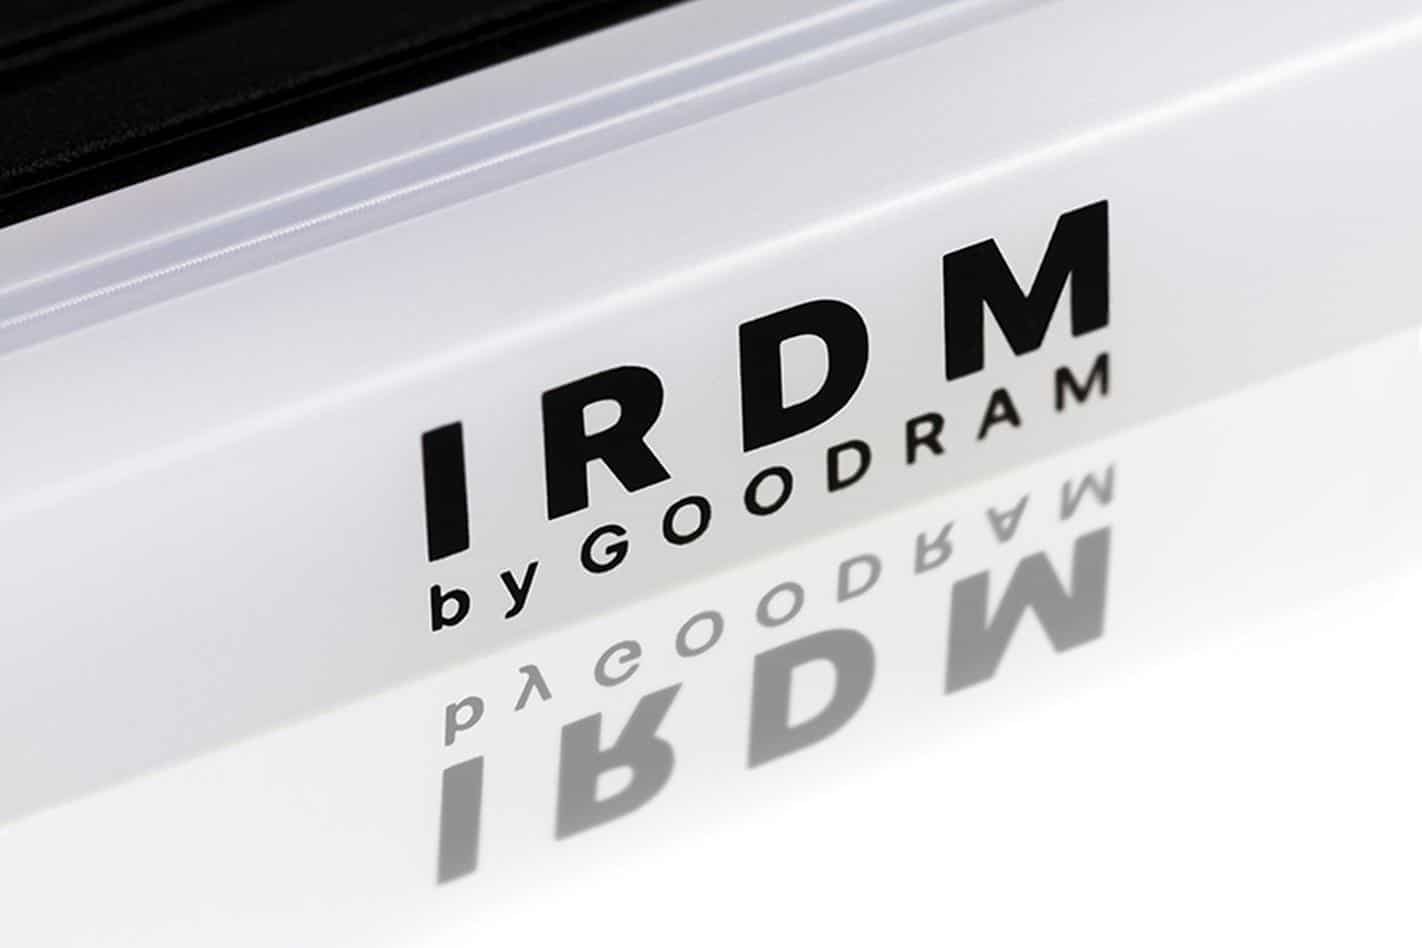 New Polish DDR4 IRDM.  What has Goodram prepared?